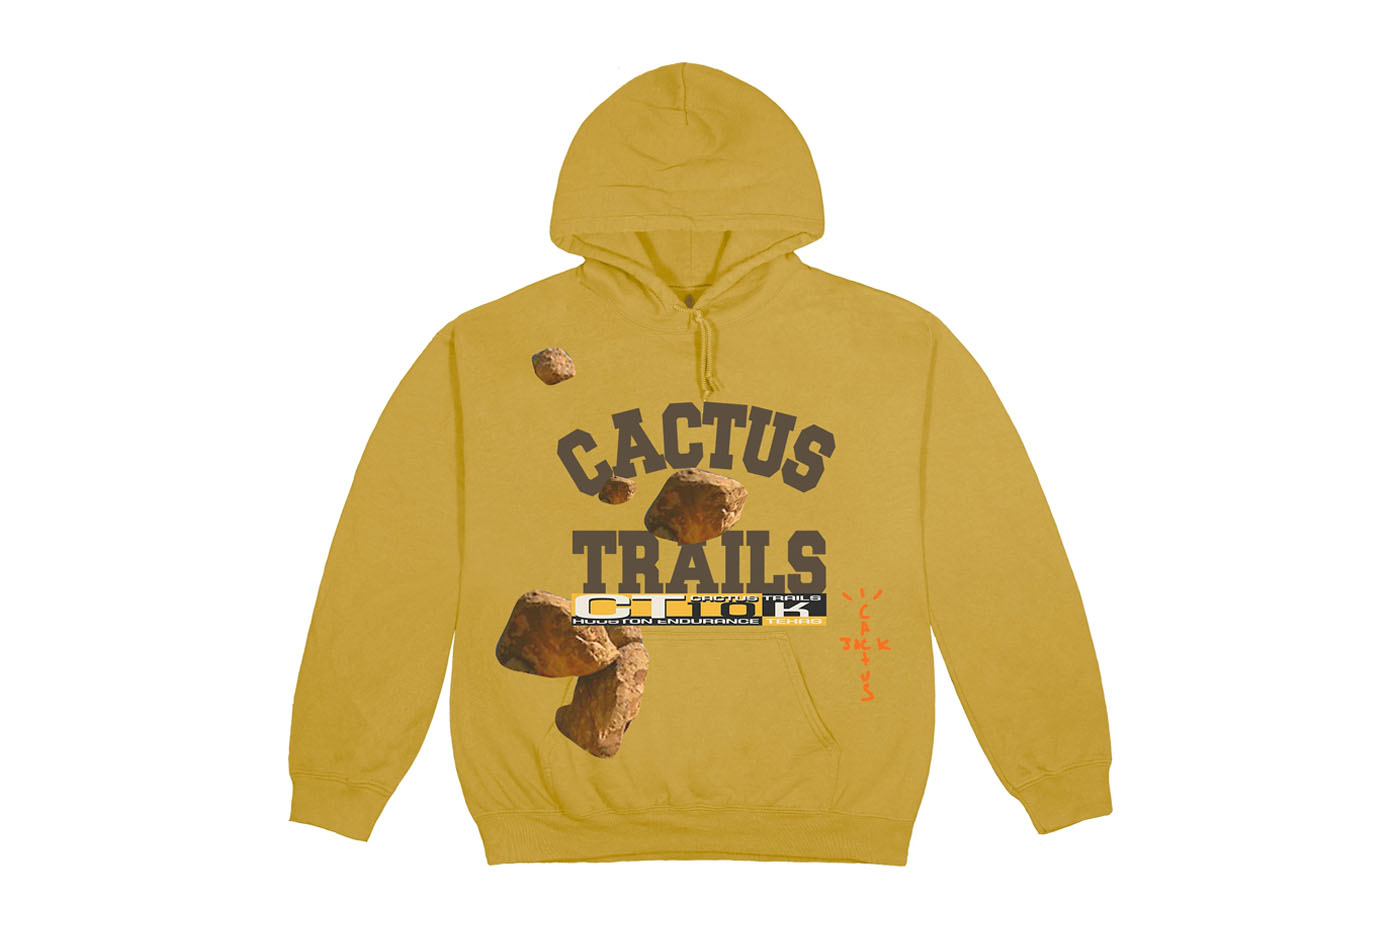 34travis-scott-cactus-trails-merch-may-2020